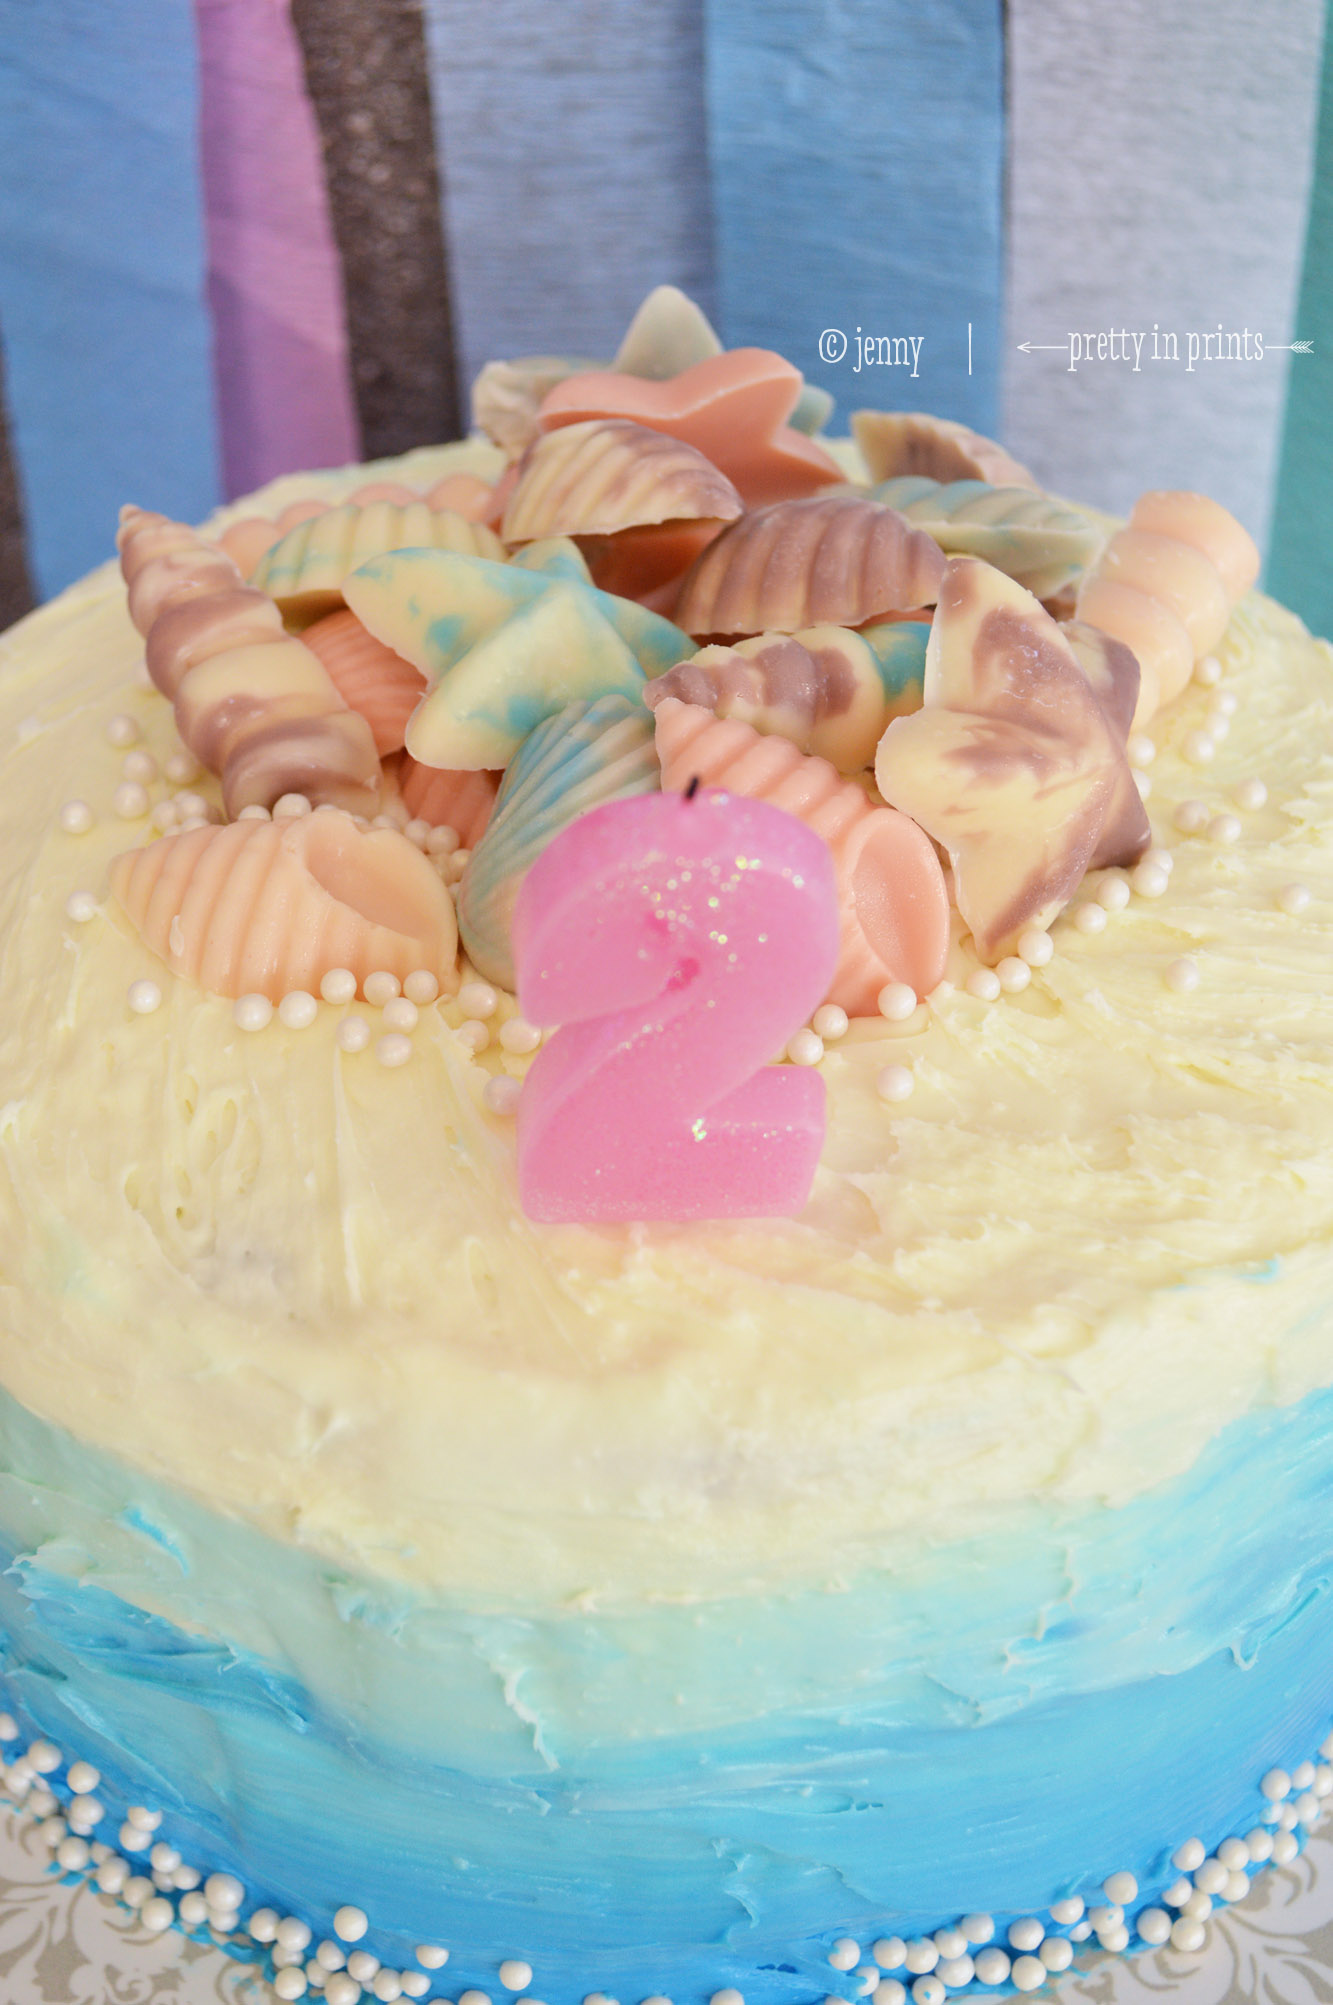 Edible Seashells on this Birthday Cake